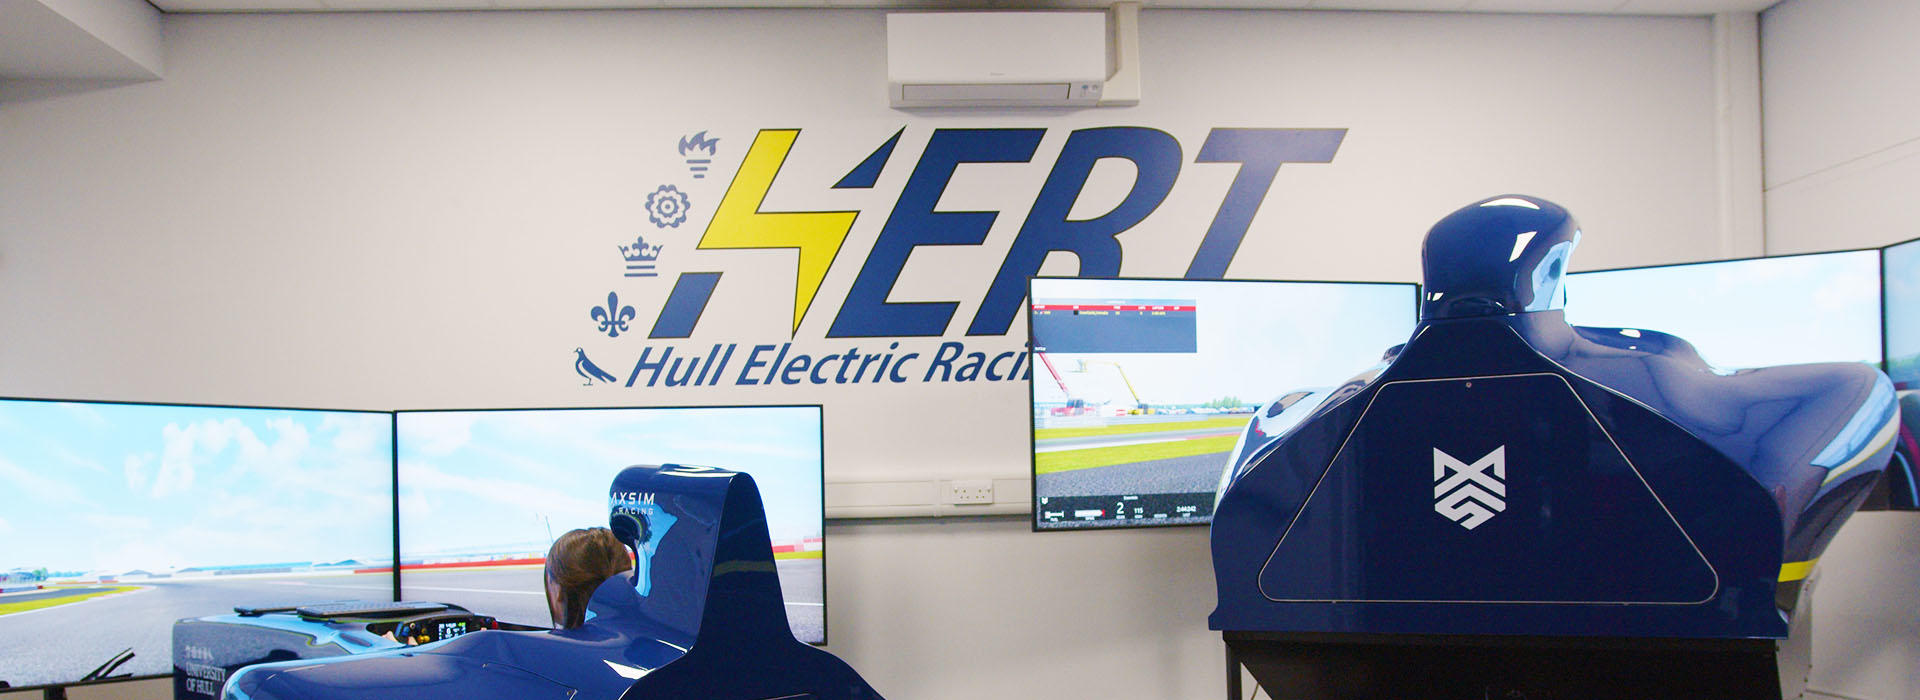 new hert logo, hull electric racing team